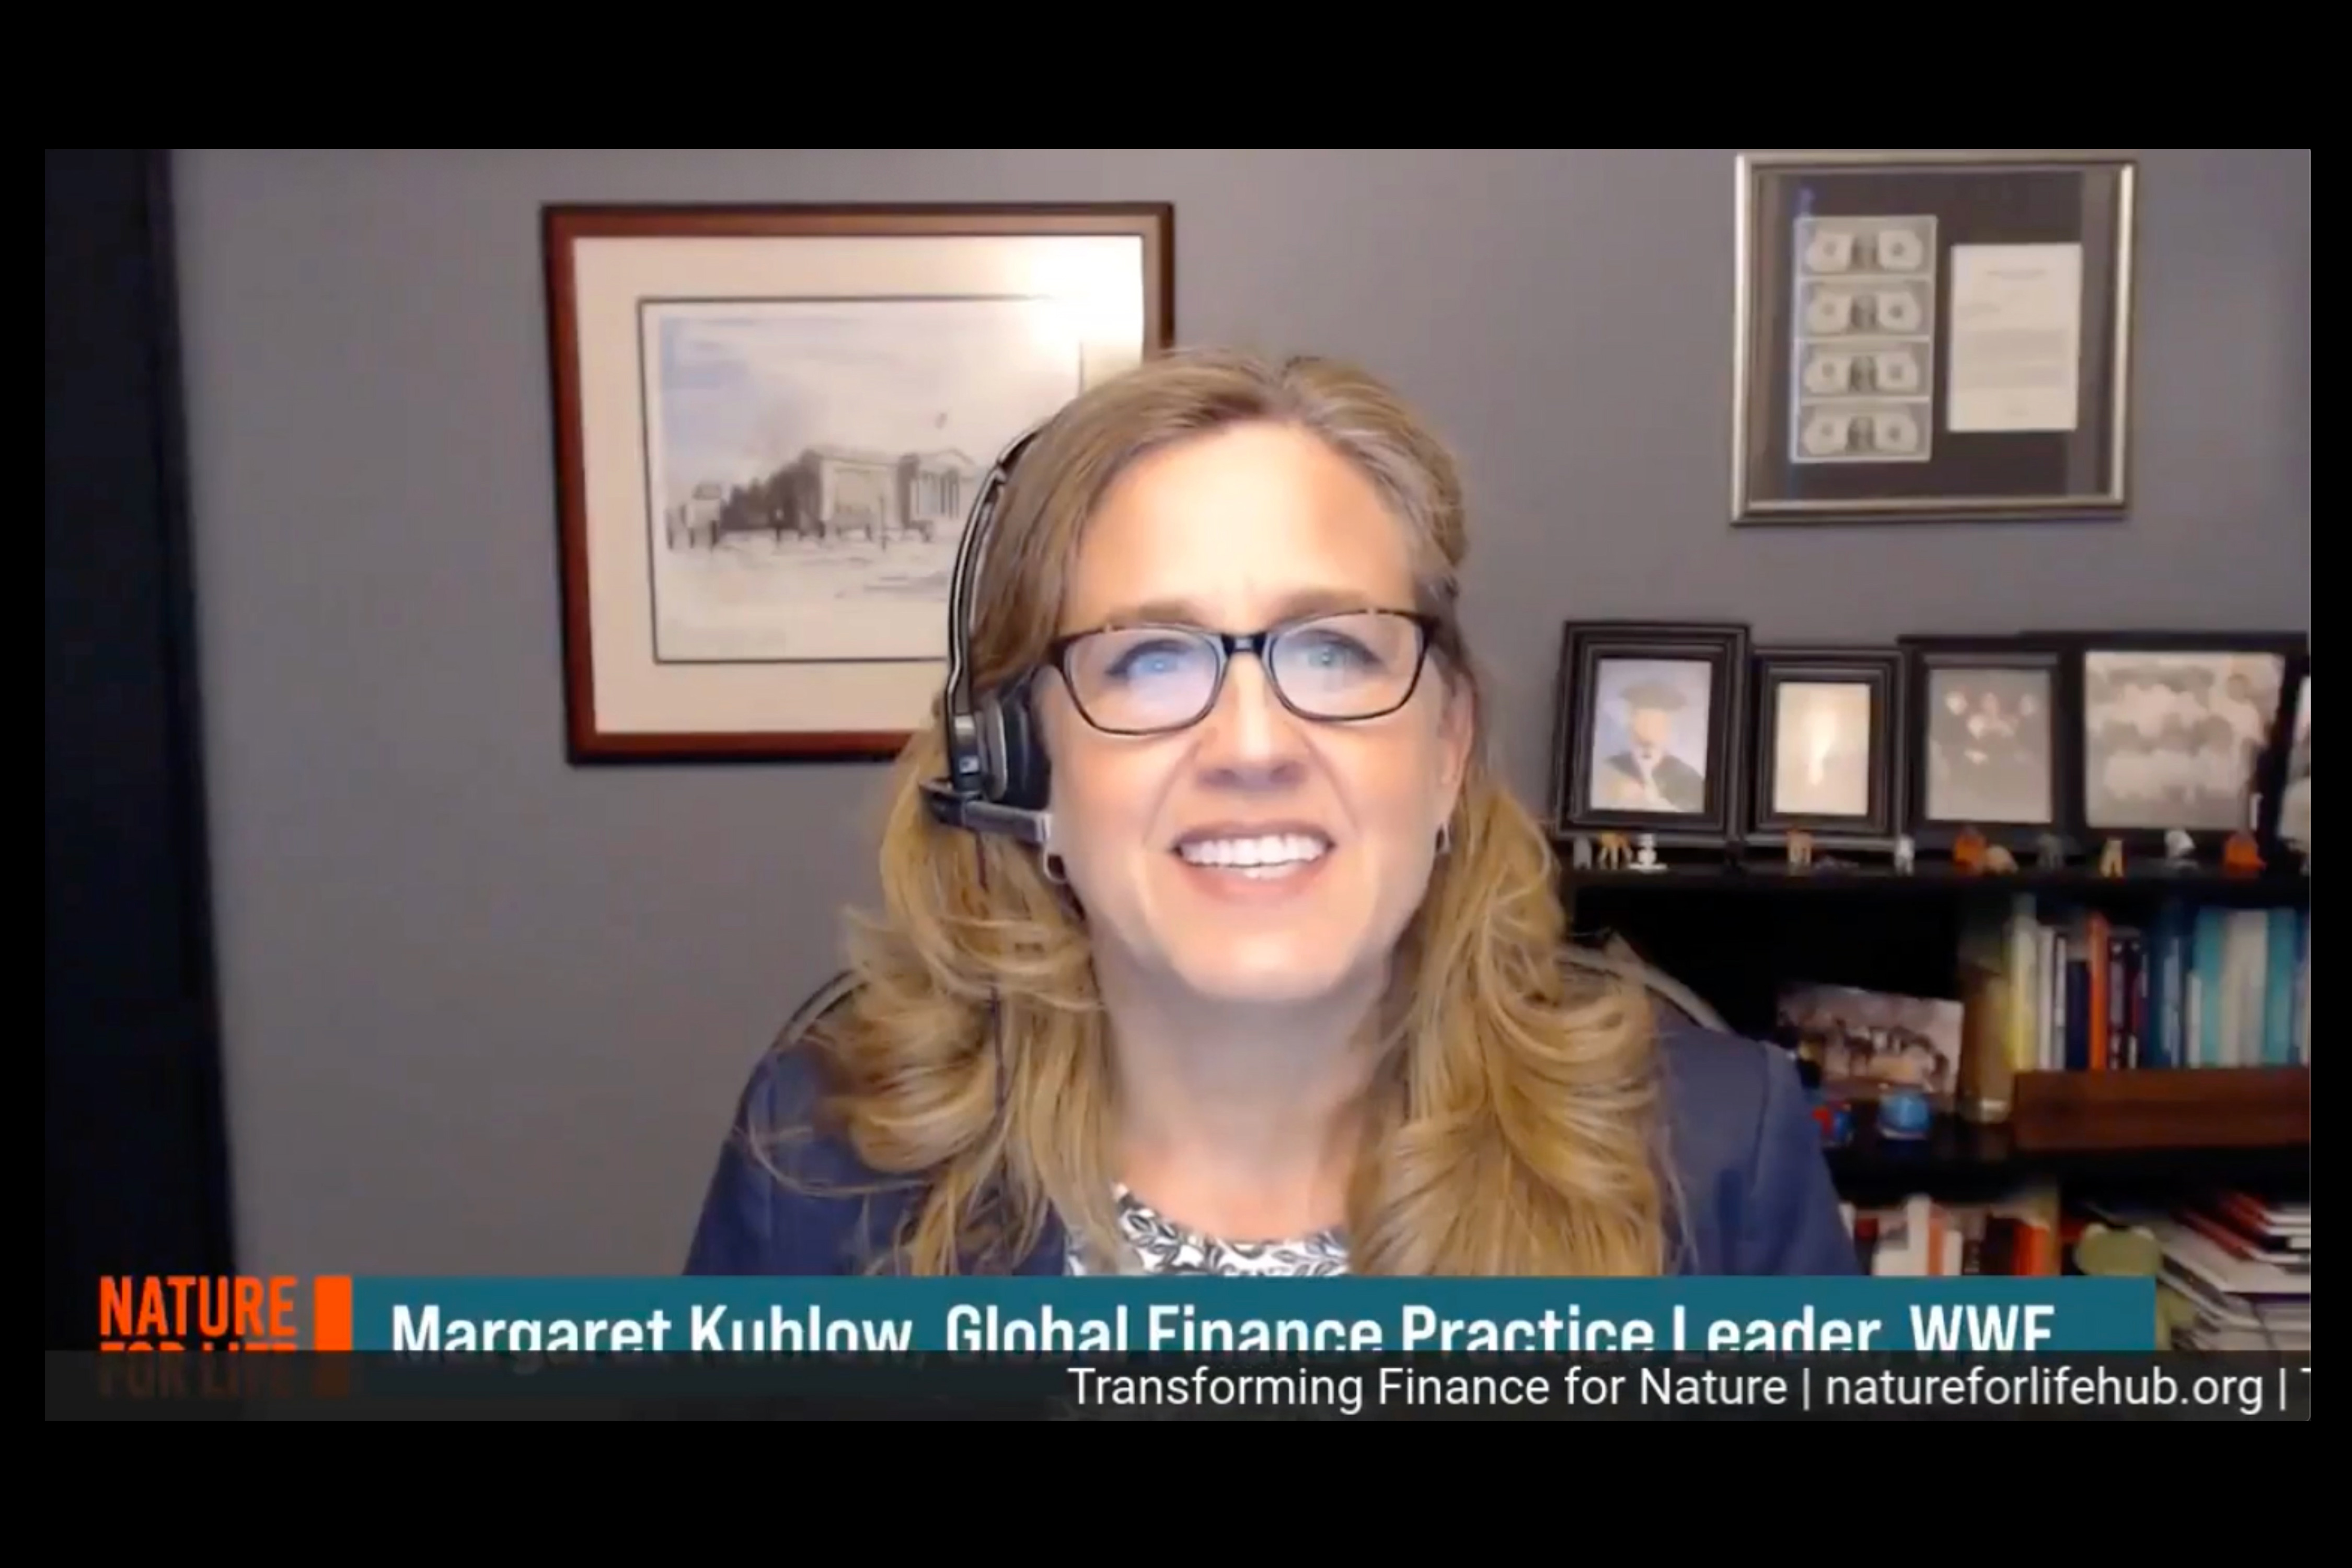 Margaret Kuhlow, Acting Global Conservation Director and Global Finance Practice Leader, WWF